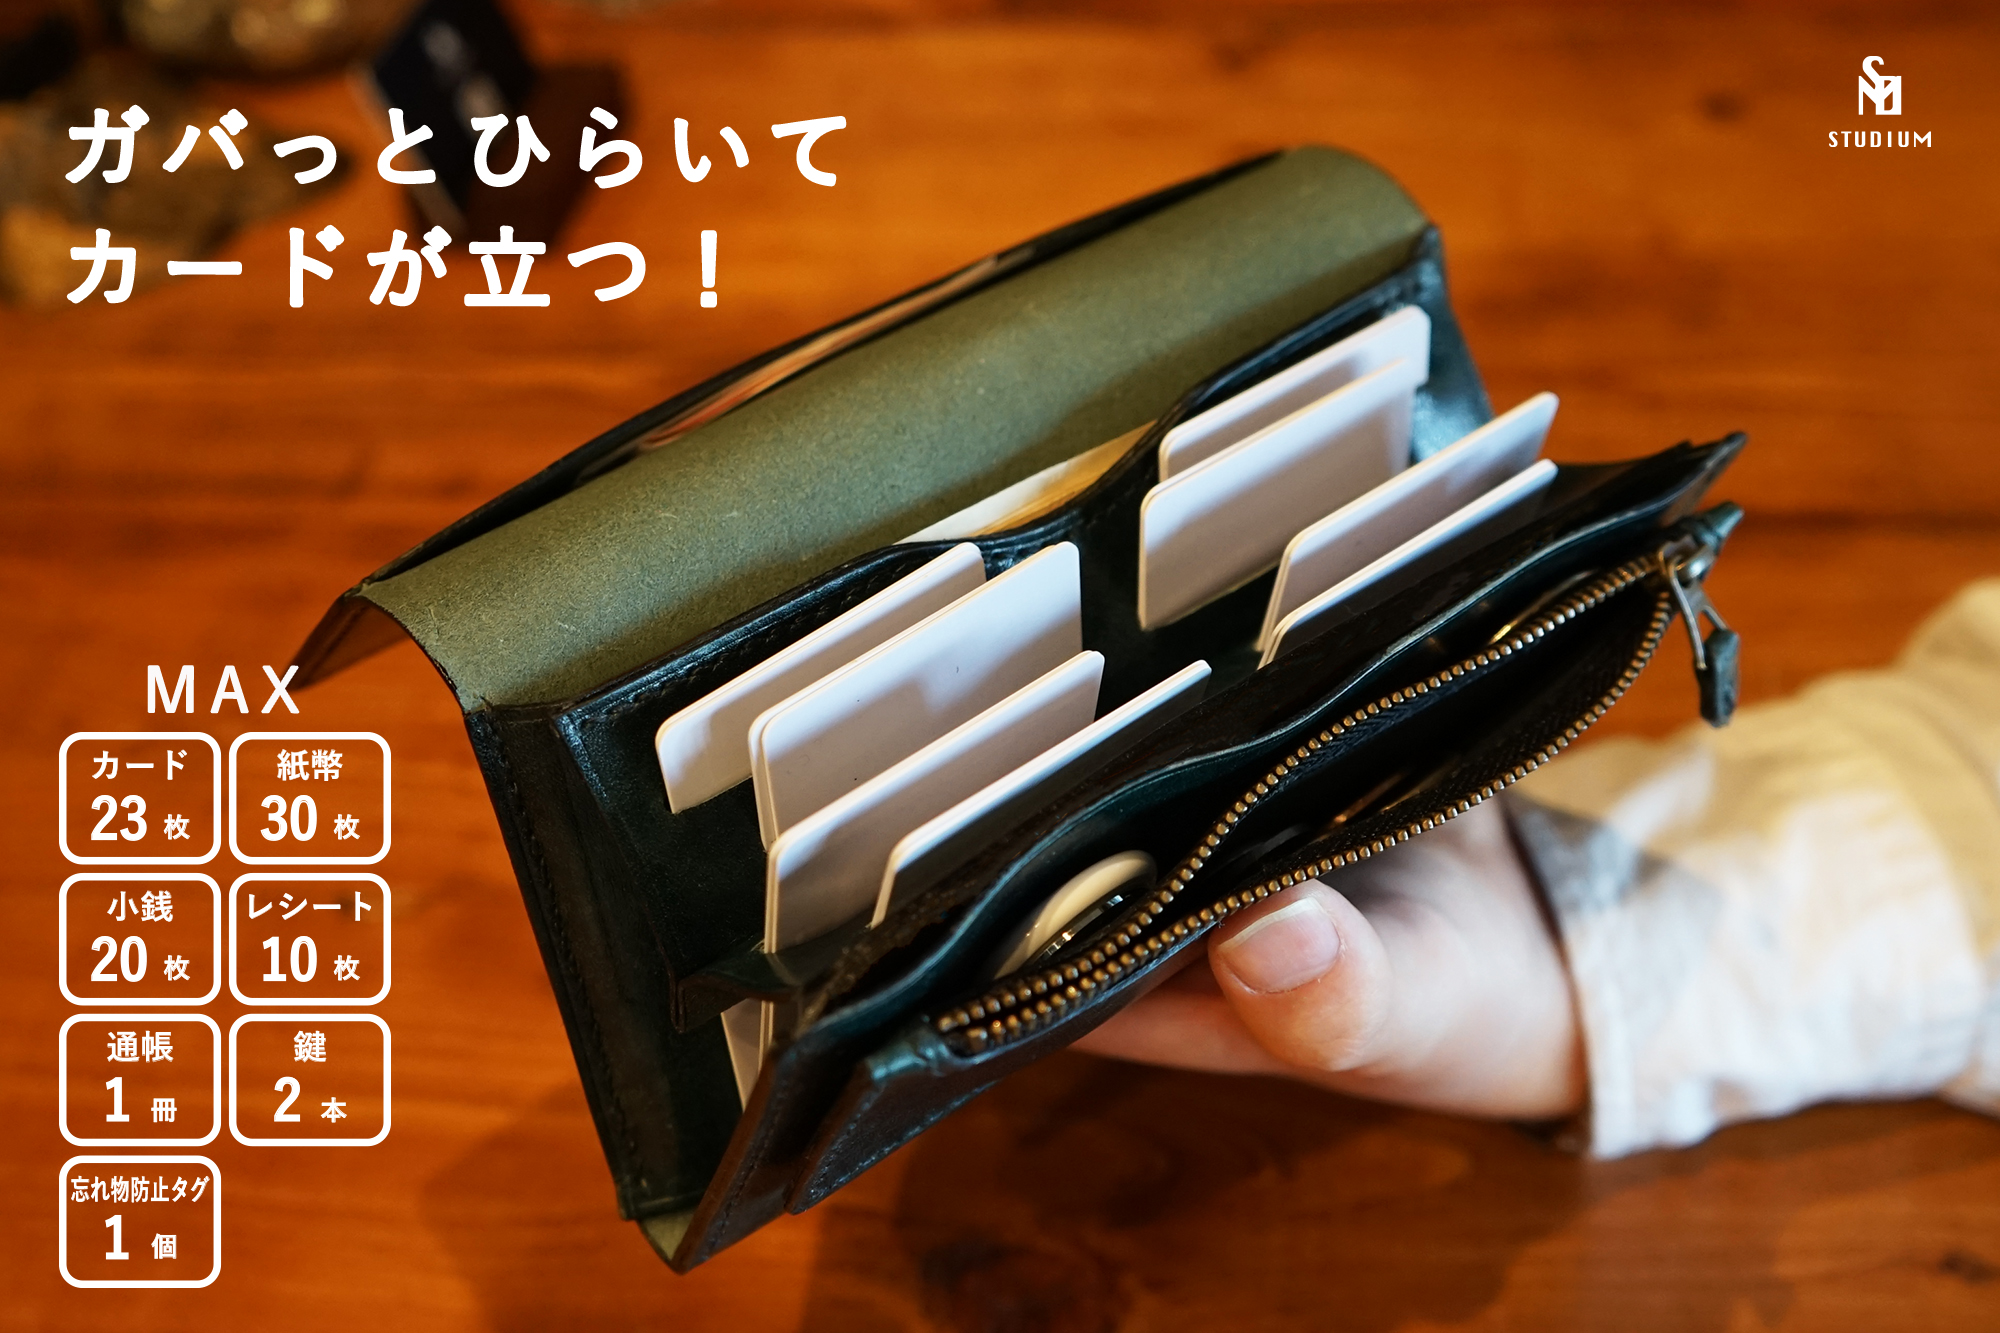 STUDIUM新作 スリムコンパクト長財布をマクアケにて12月6日より数量限定先行予約販売開始します